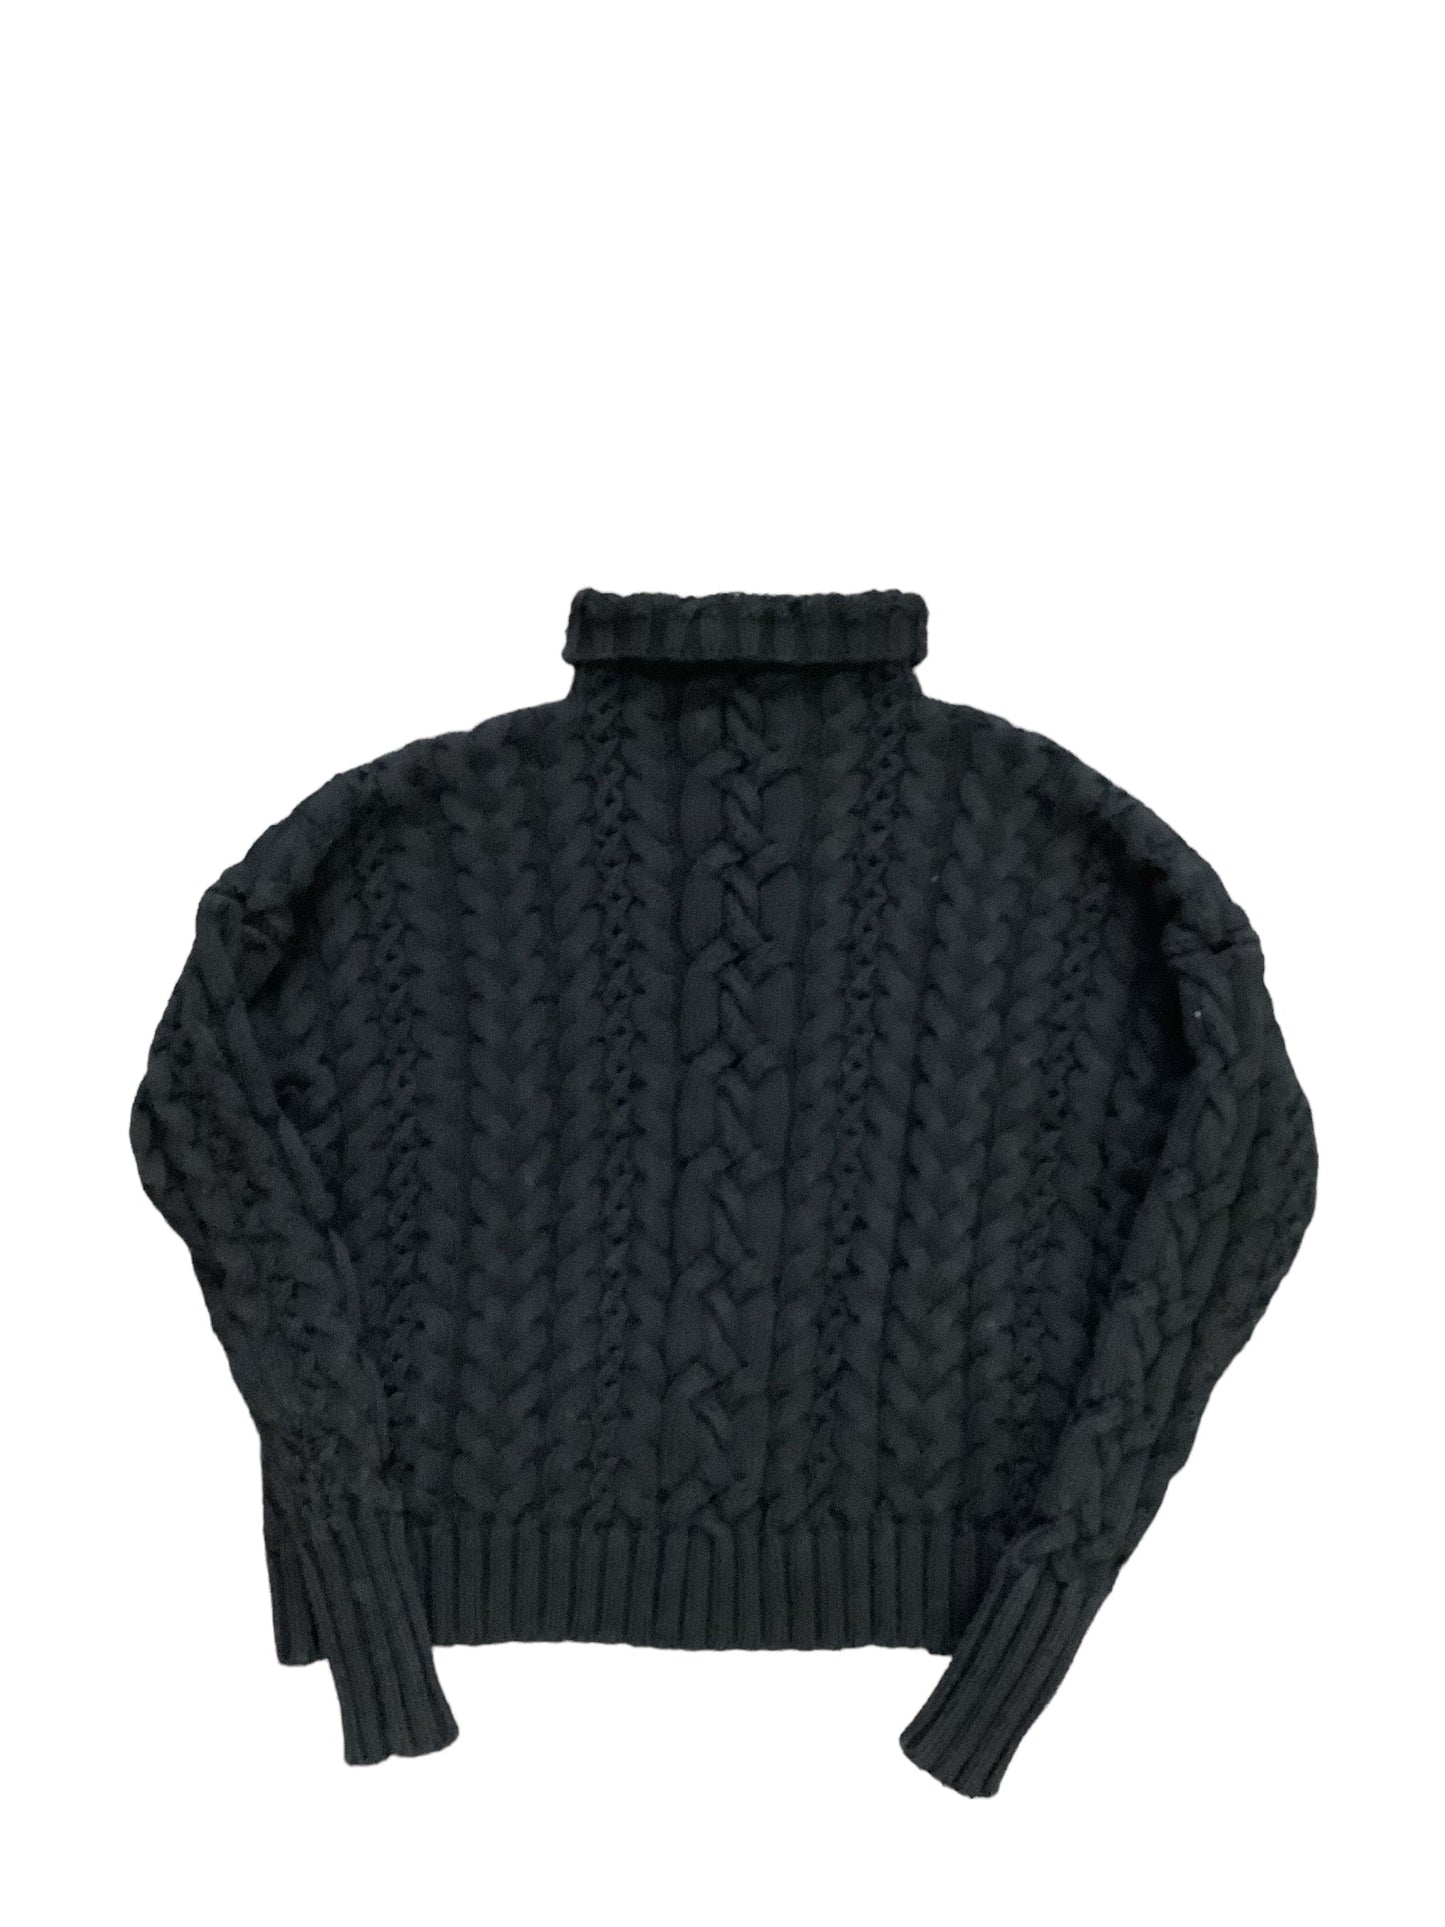 Black Sweater Ralph Lauren Black Label, Size Xs